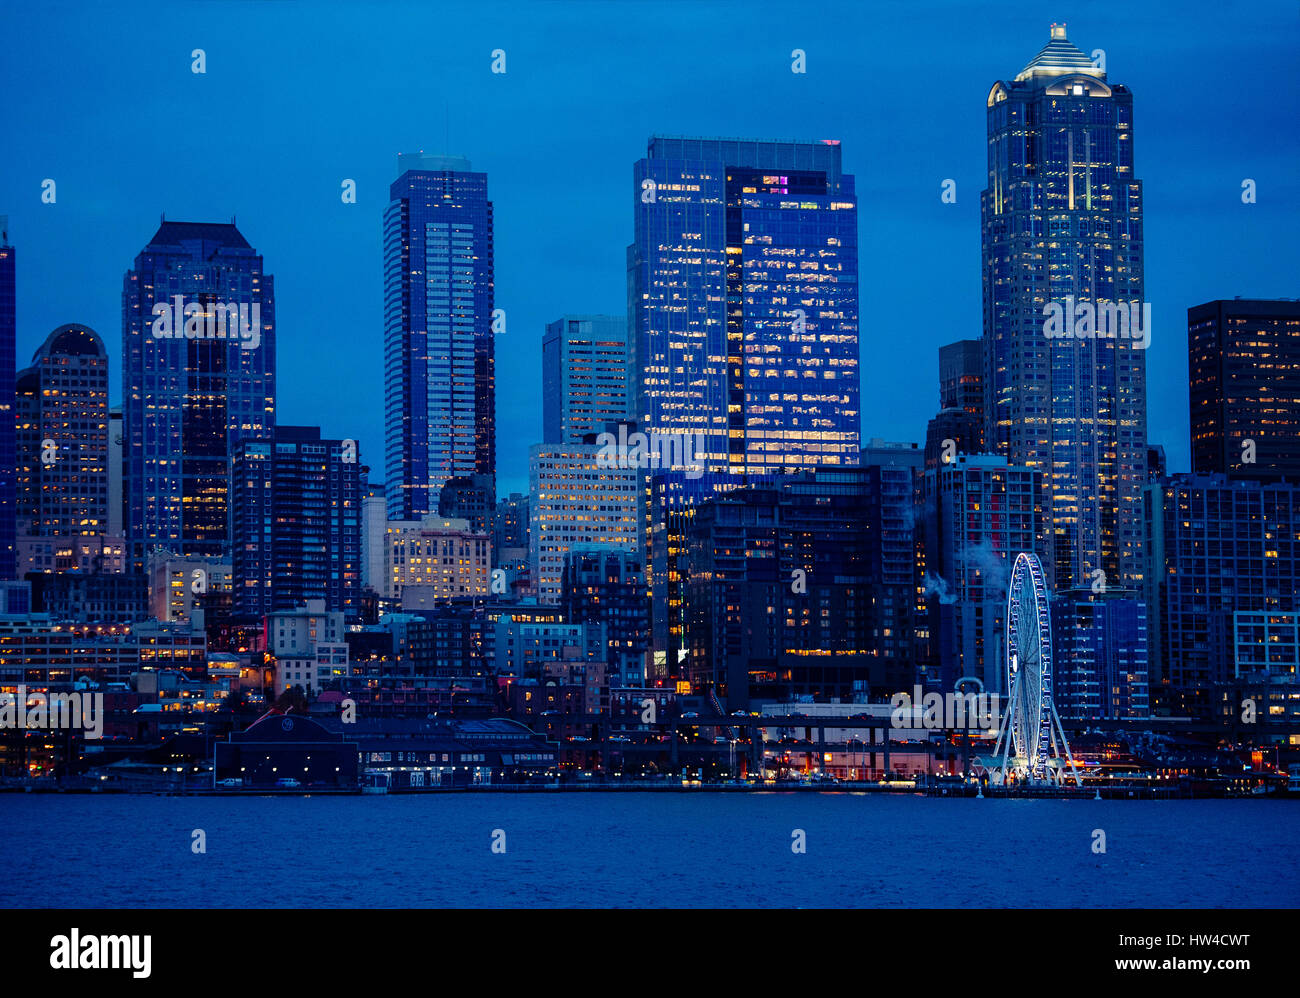 Illuminated city skyline at waterfront Stock Photo